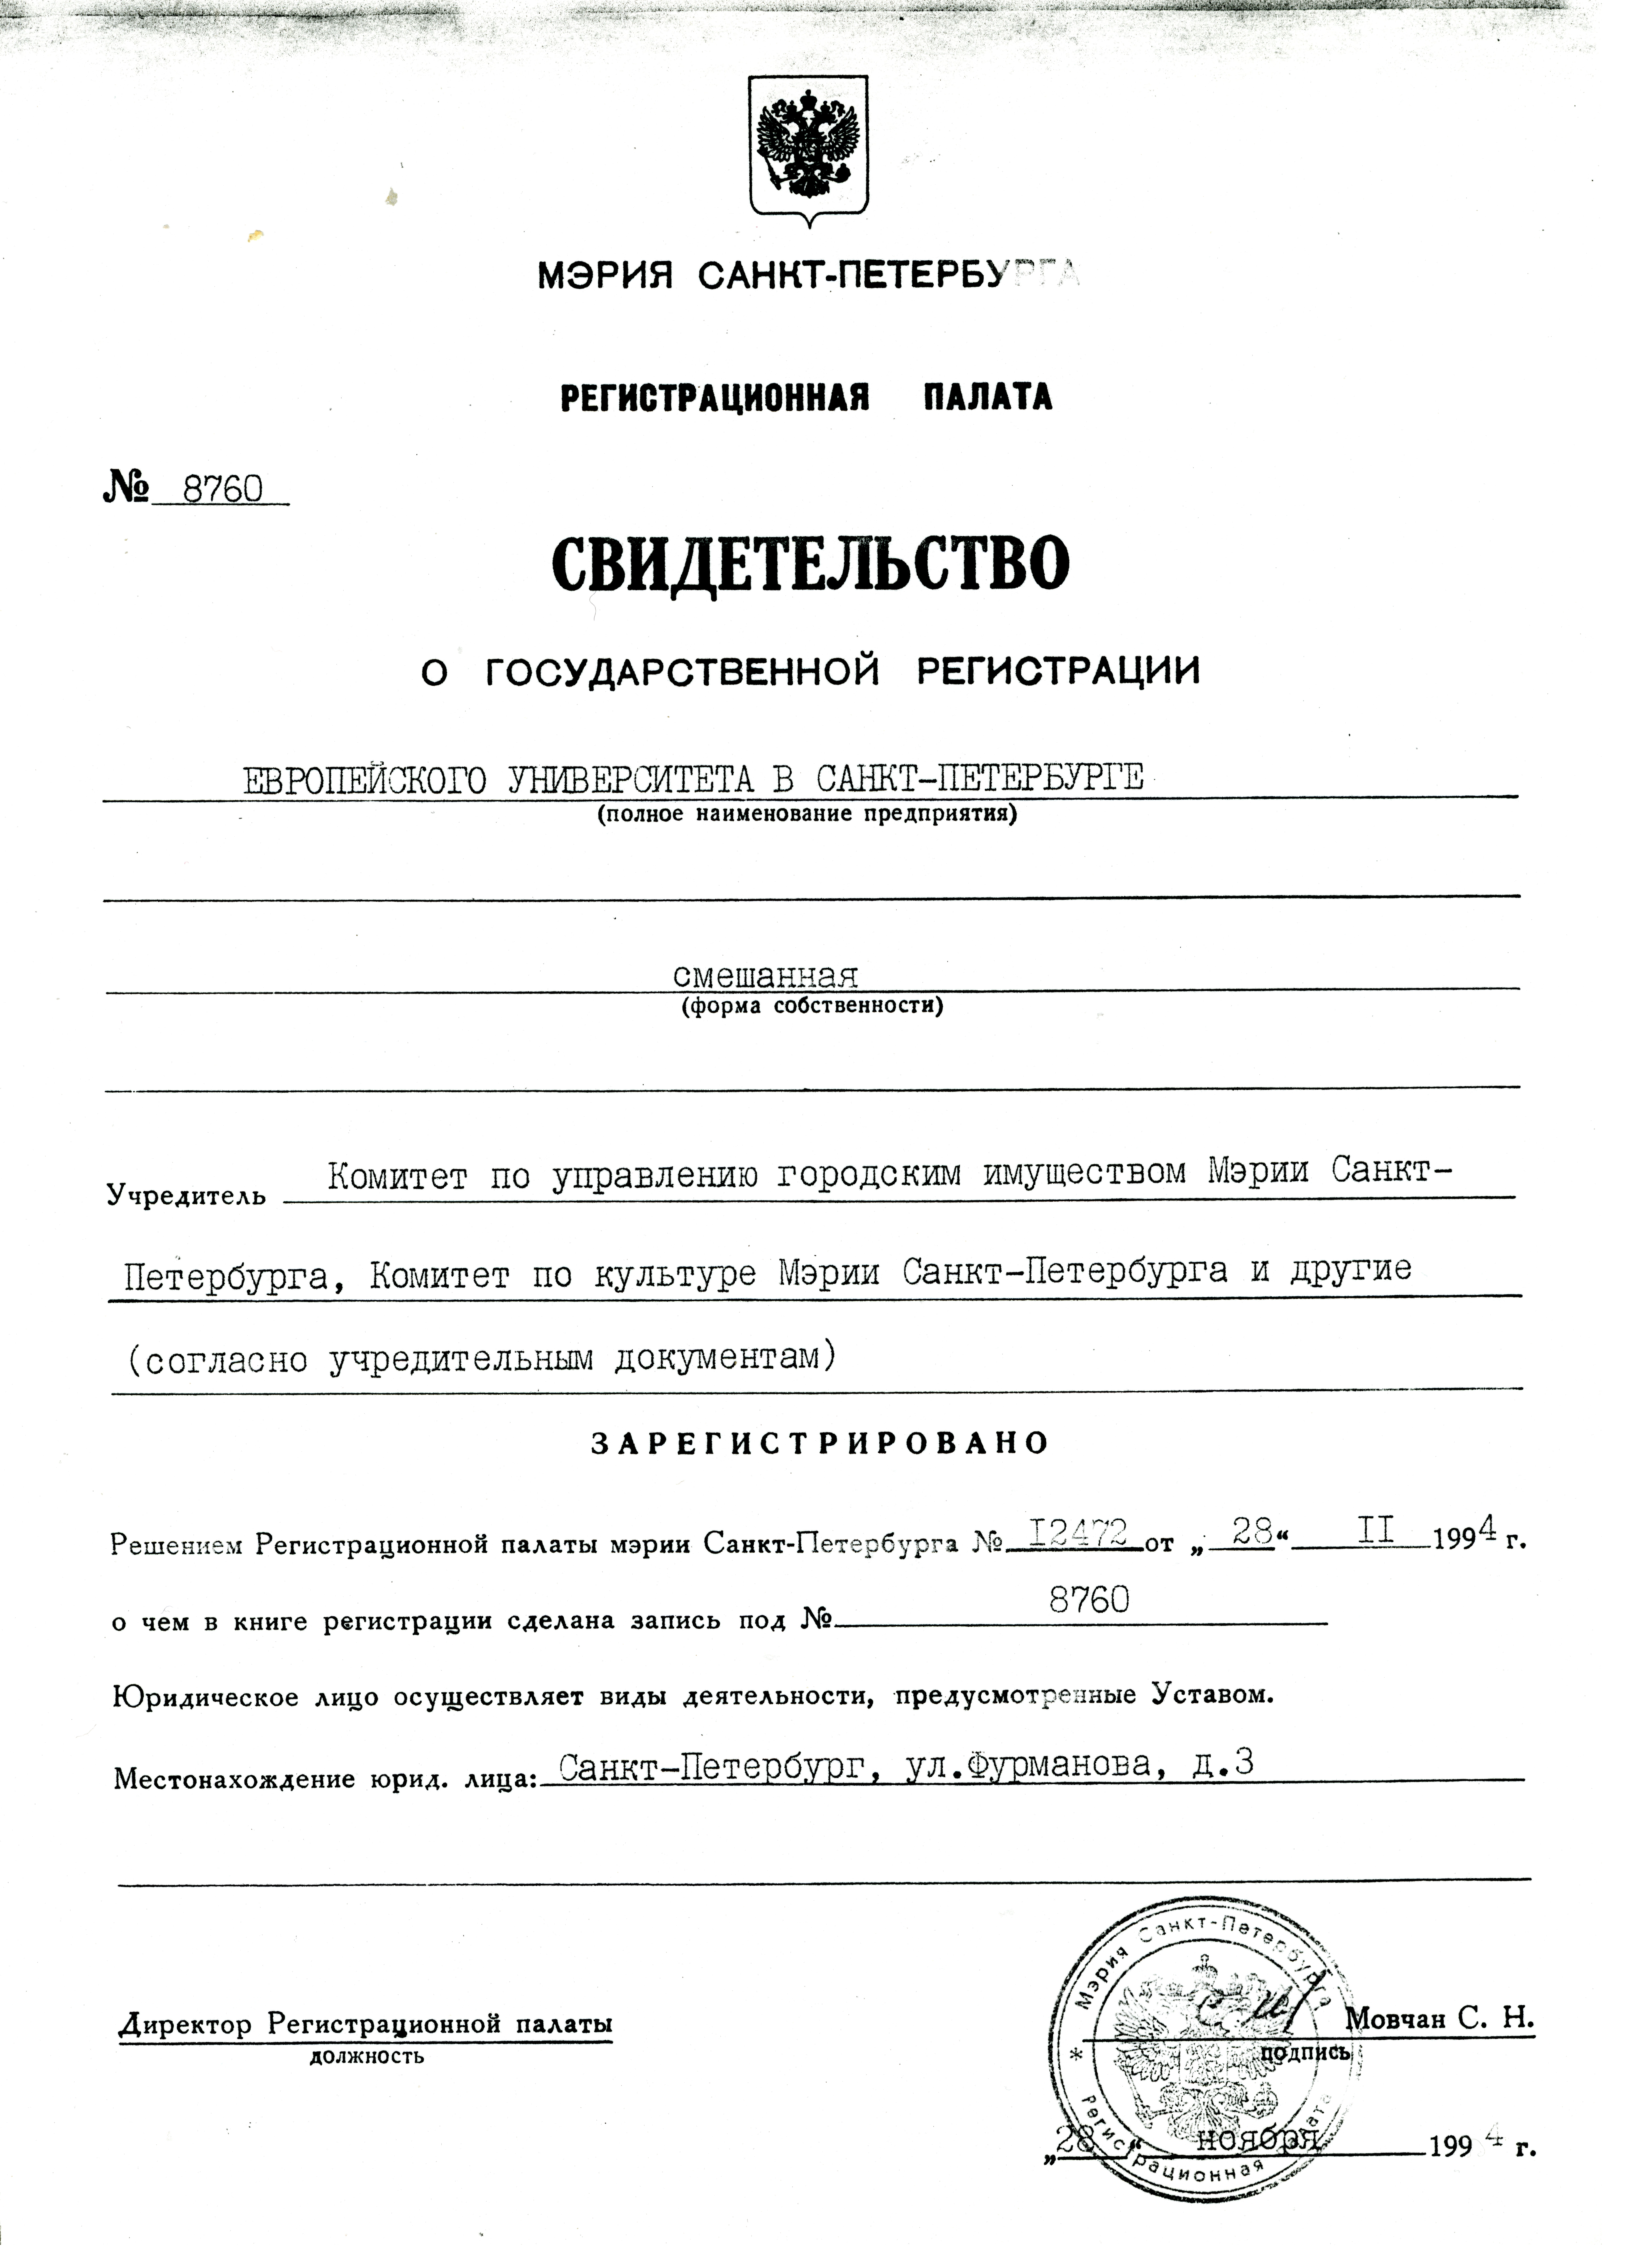 Svidetelstvo registracii EUSP 1994